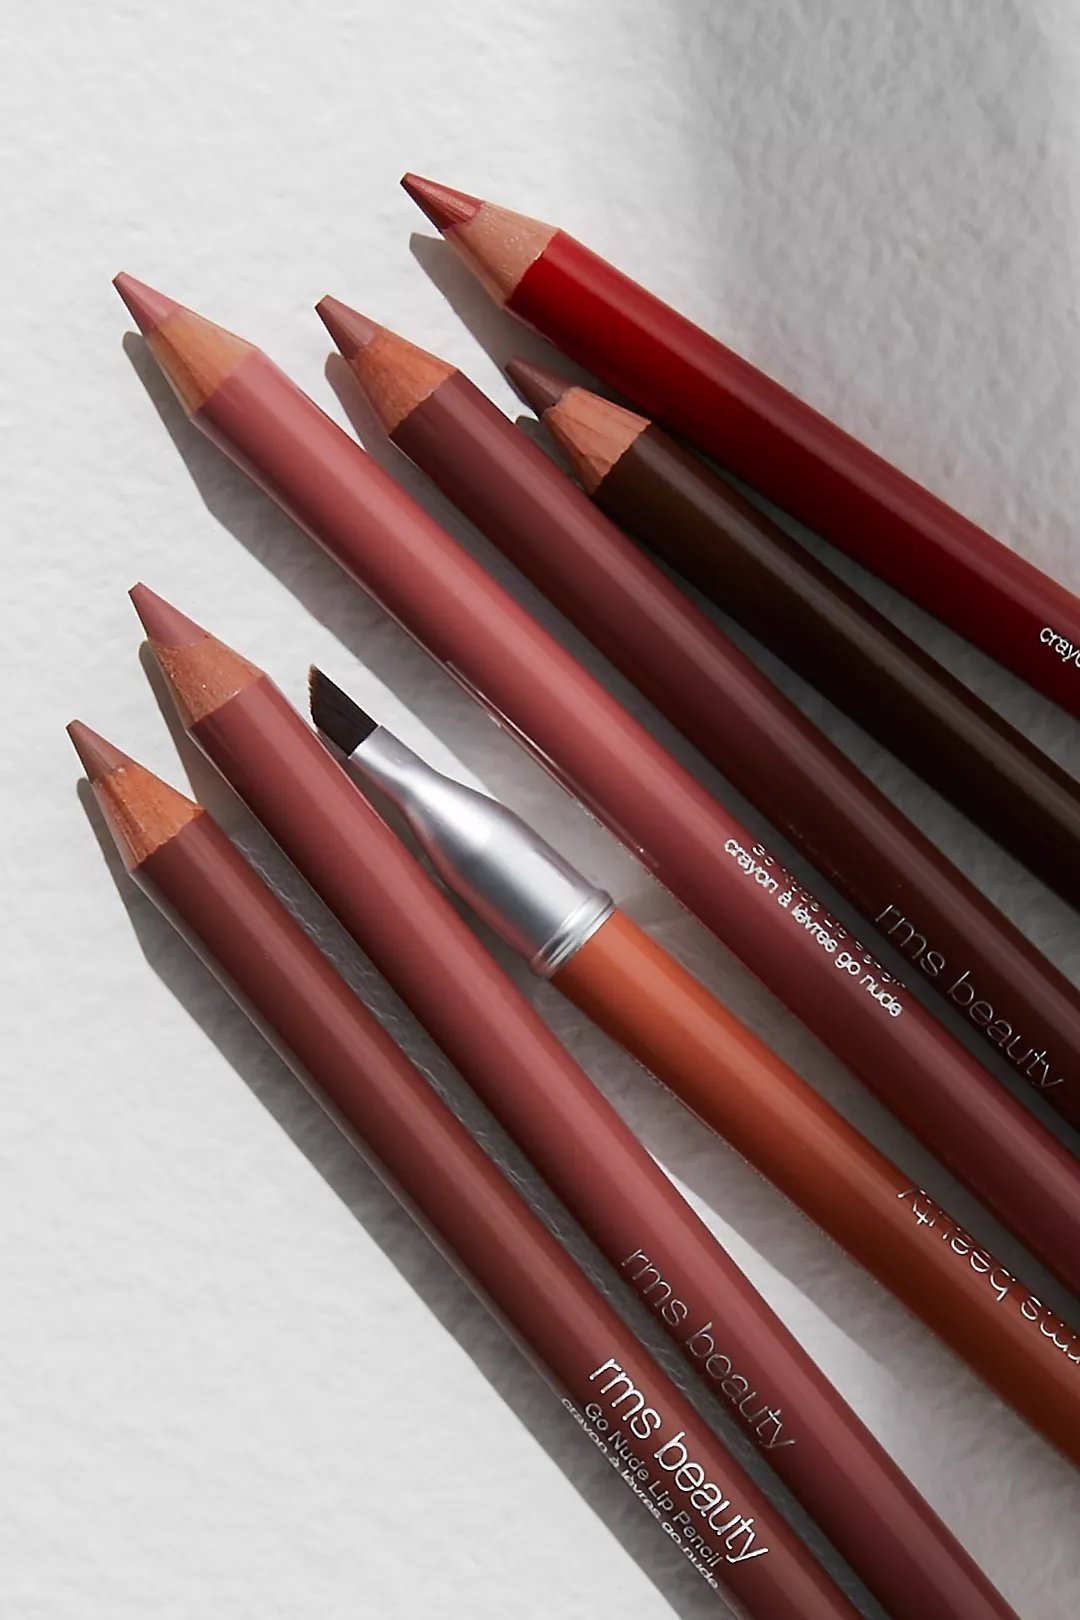 RMS Beauty Go Nude Lip Pencils